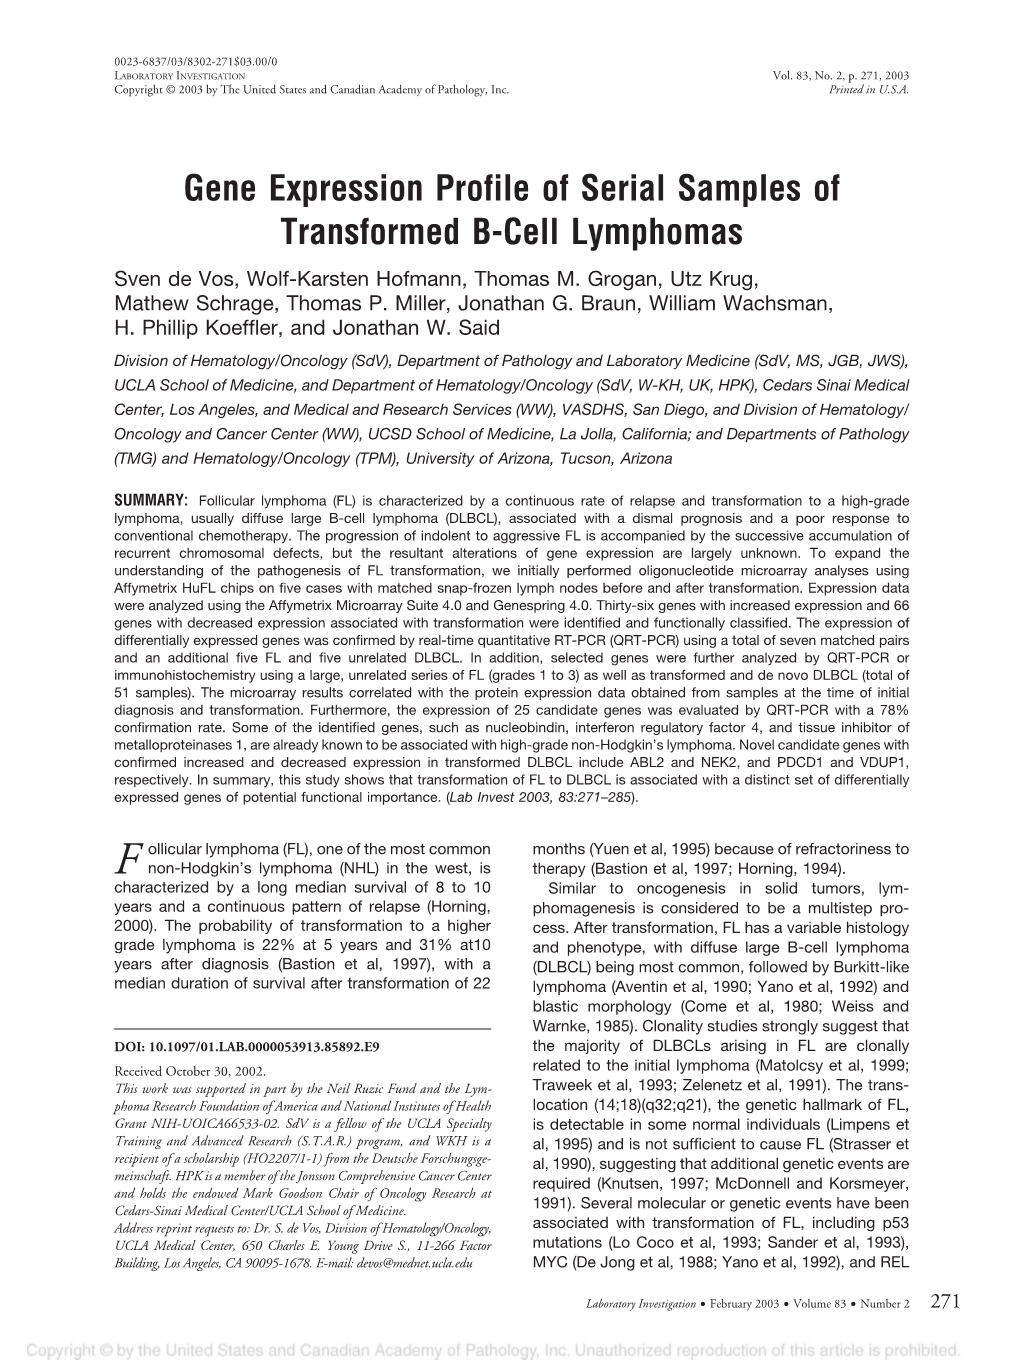 Gene Expression Profile of Serial Samples of Transformed B-Cell Lymphomas Sven De Vos, Wolf-Karsten Hofmann, Thomas M